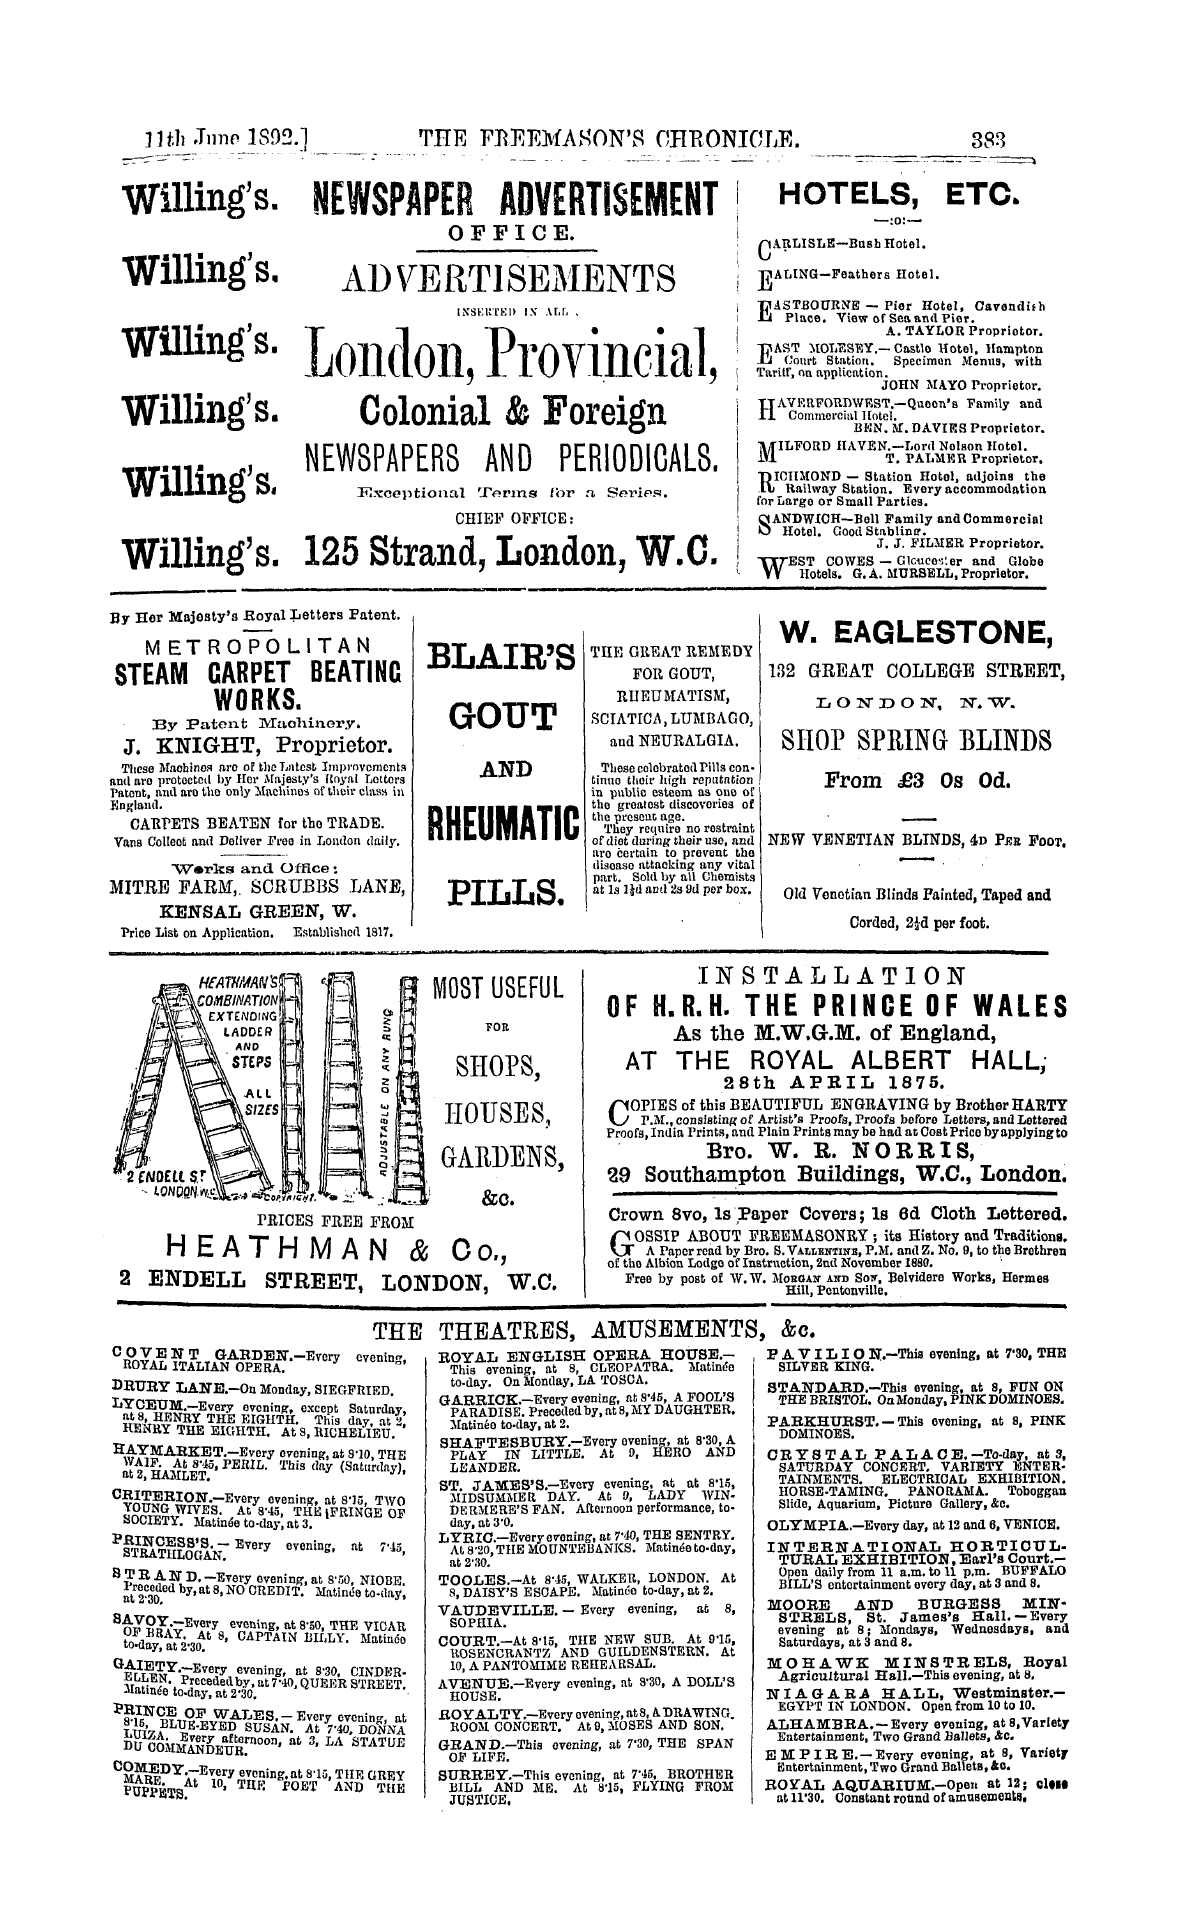 The Freemason's Chronicle: 1892-06-11 - Tee Theatres, Amusements, &C.